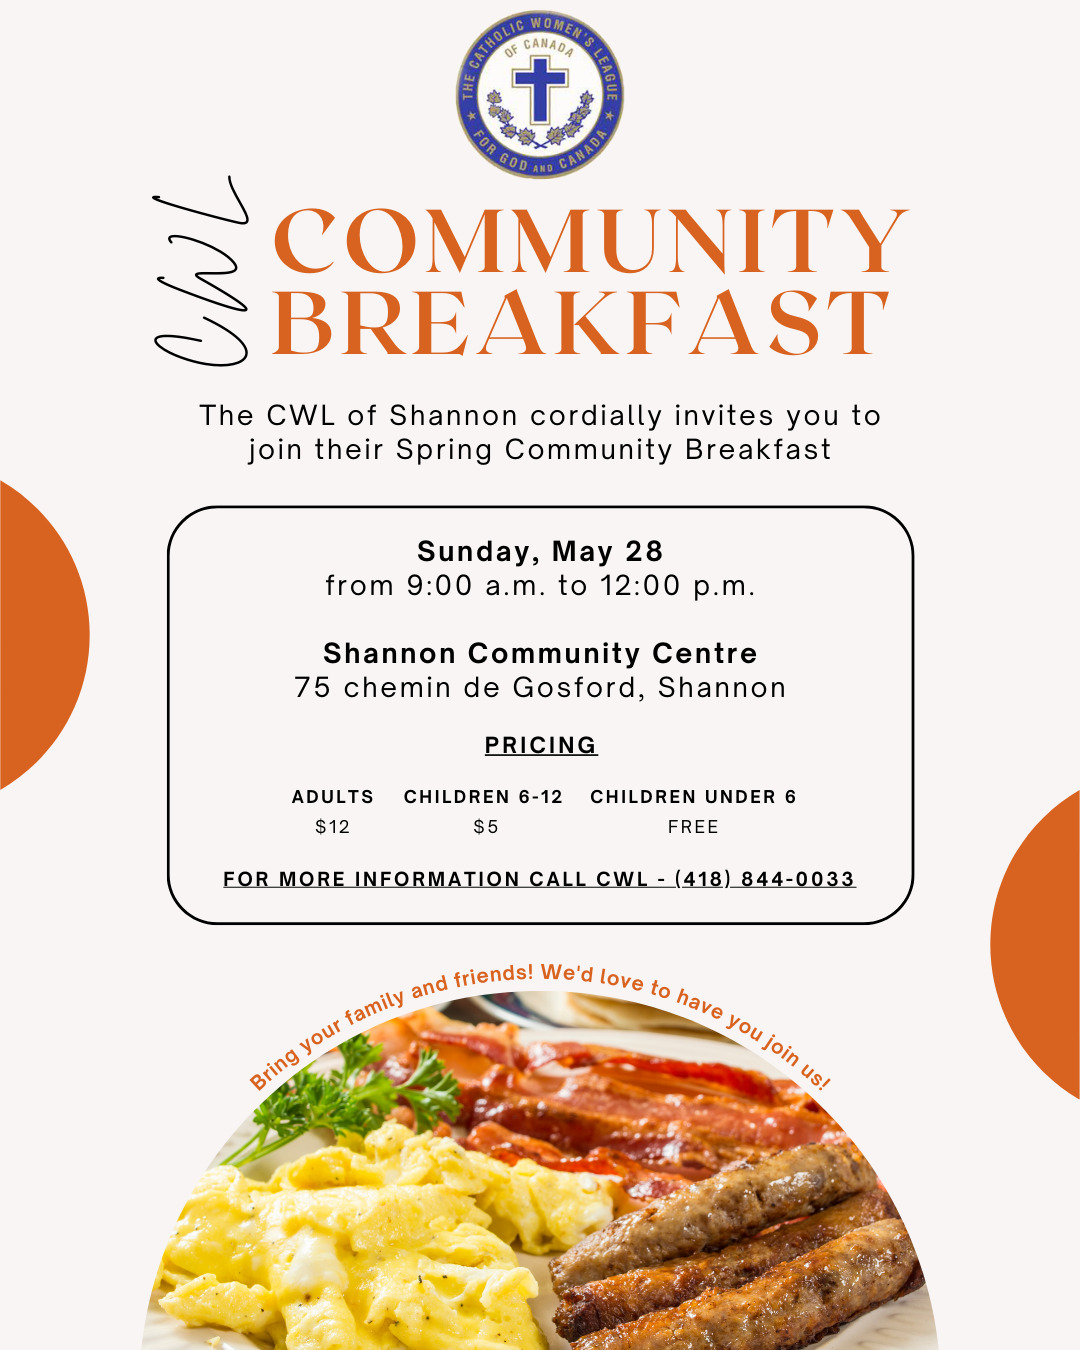 CWL Community Breakfast (Shannon) @ Shannon Community Center